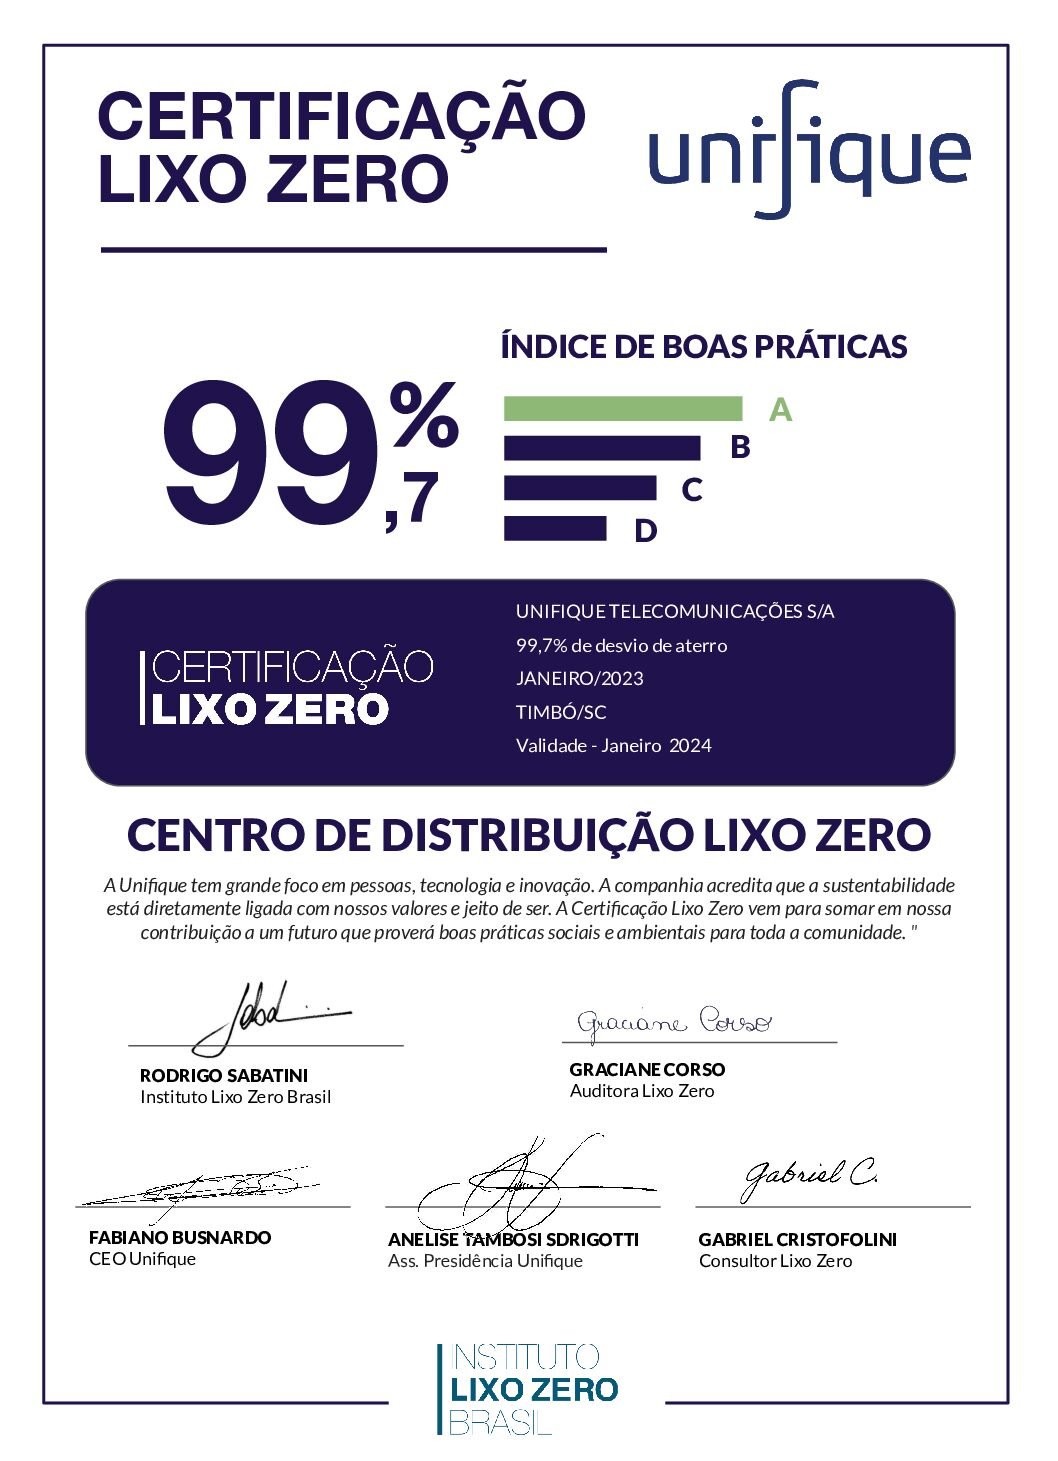 Certificacao Lixo Zero_Unifique_2022-2023 (1)